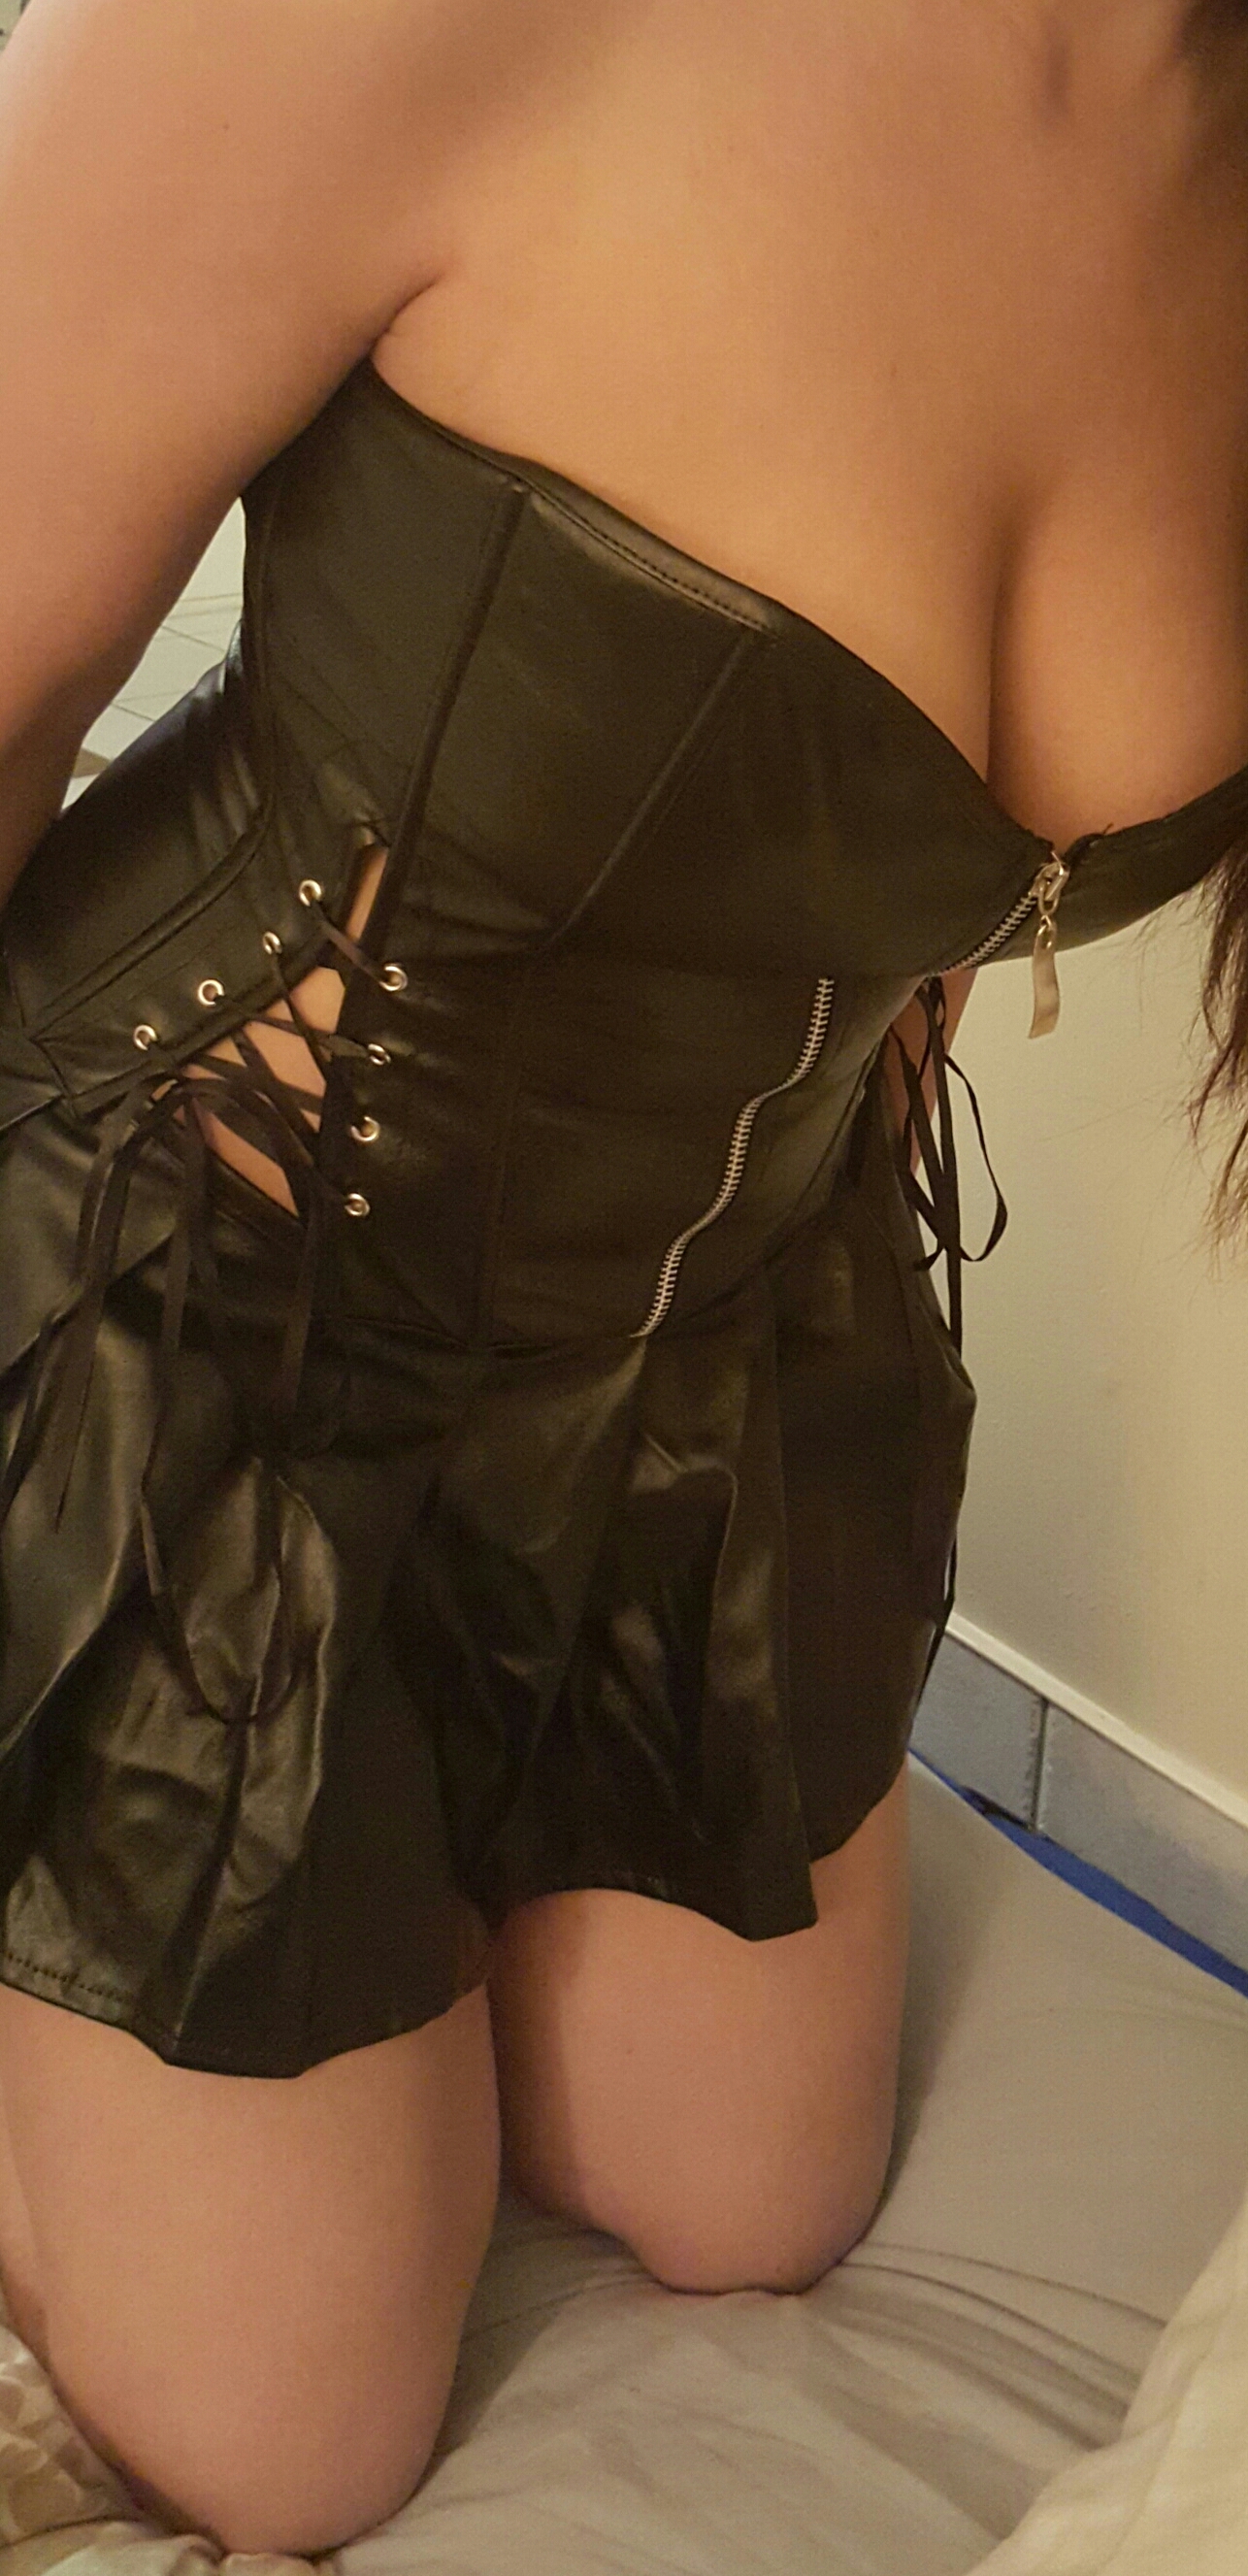 My Slutty 34yo Hotwife In Her Sexy Leather Dress F Porn